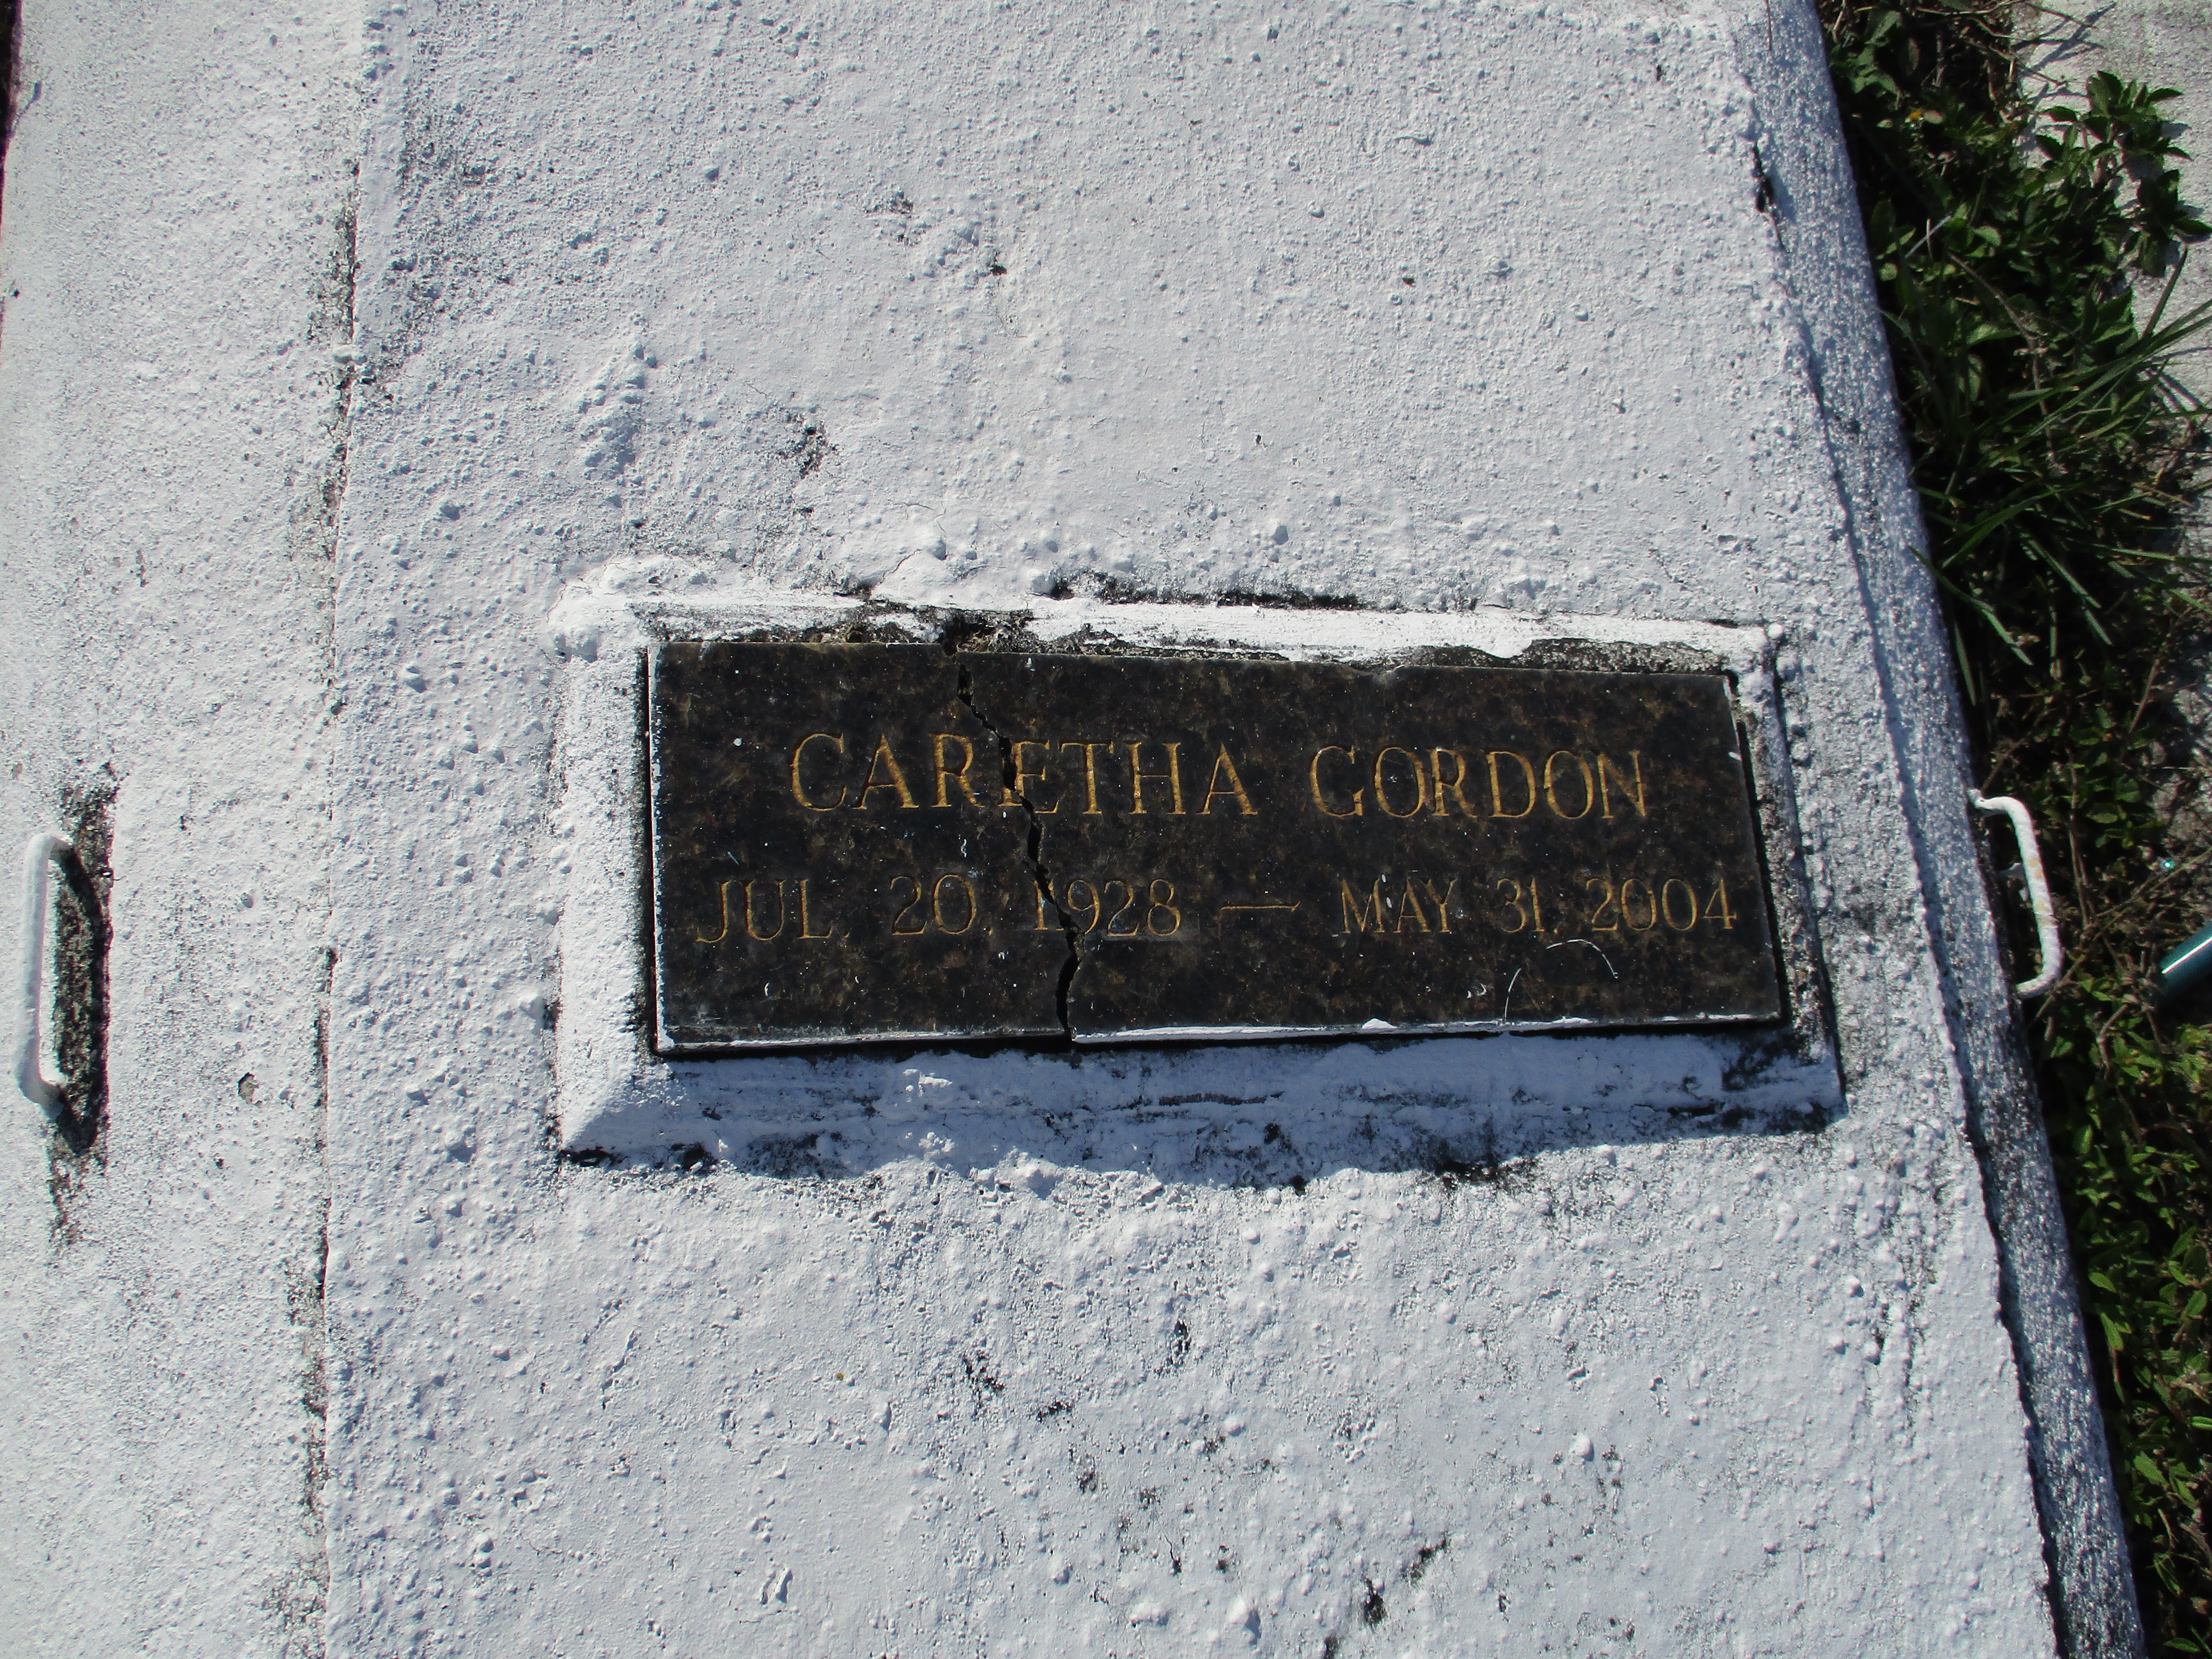 Caretha Gordon